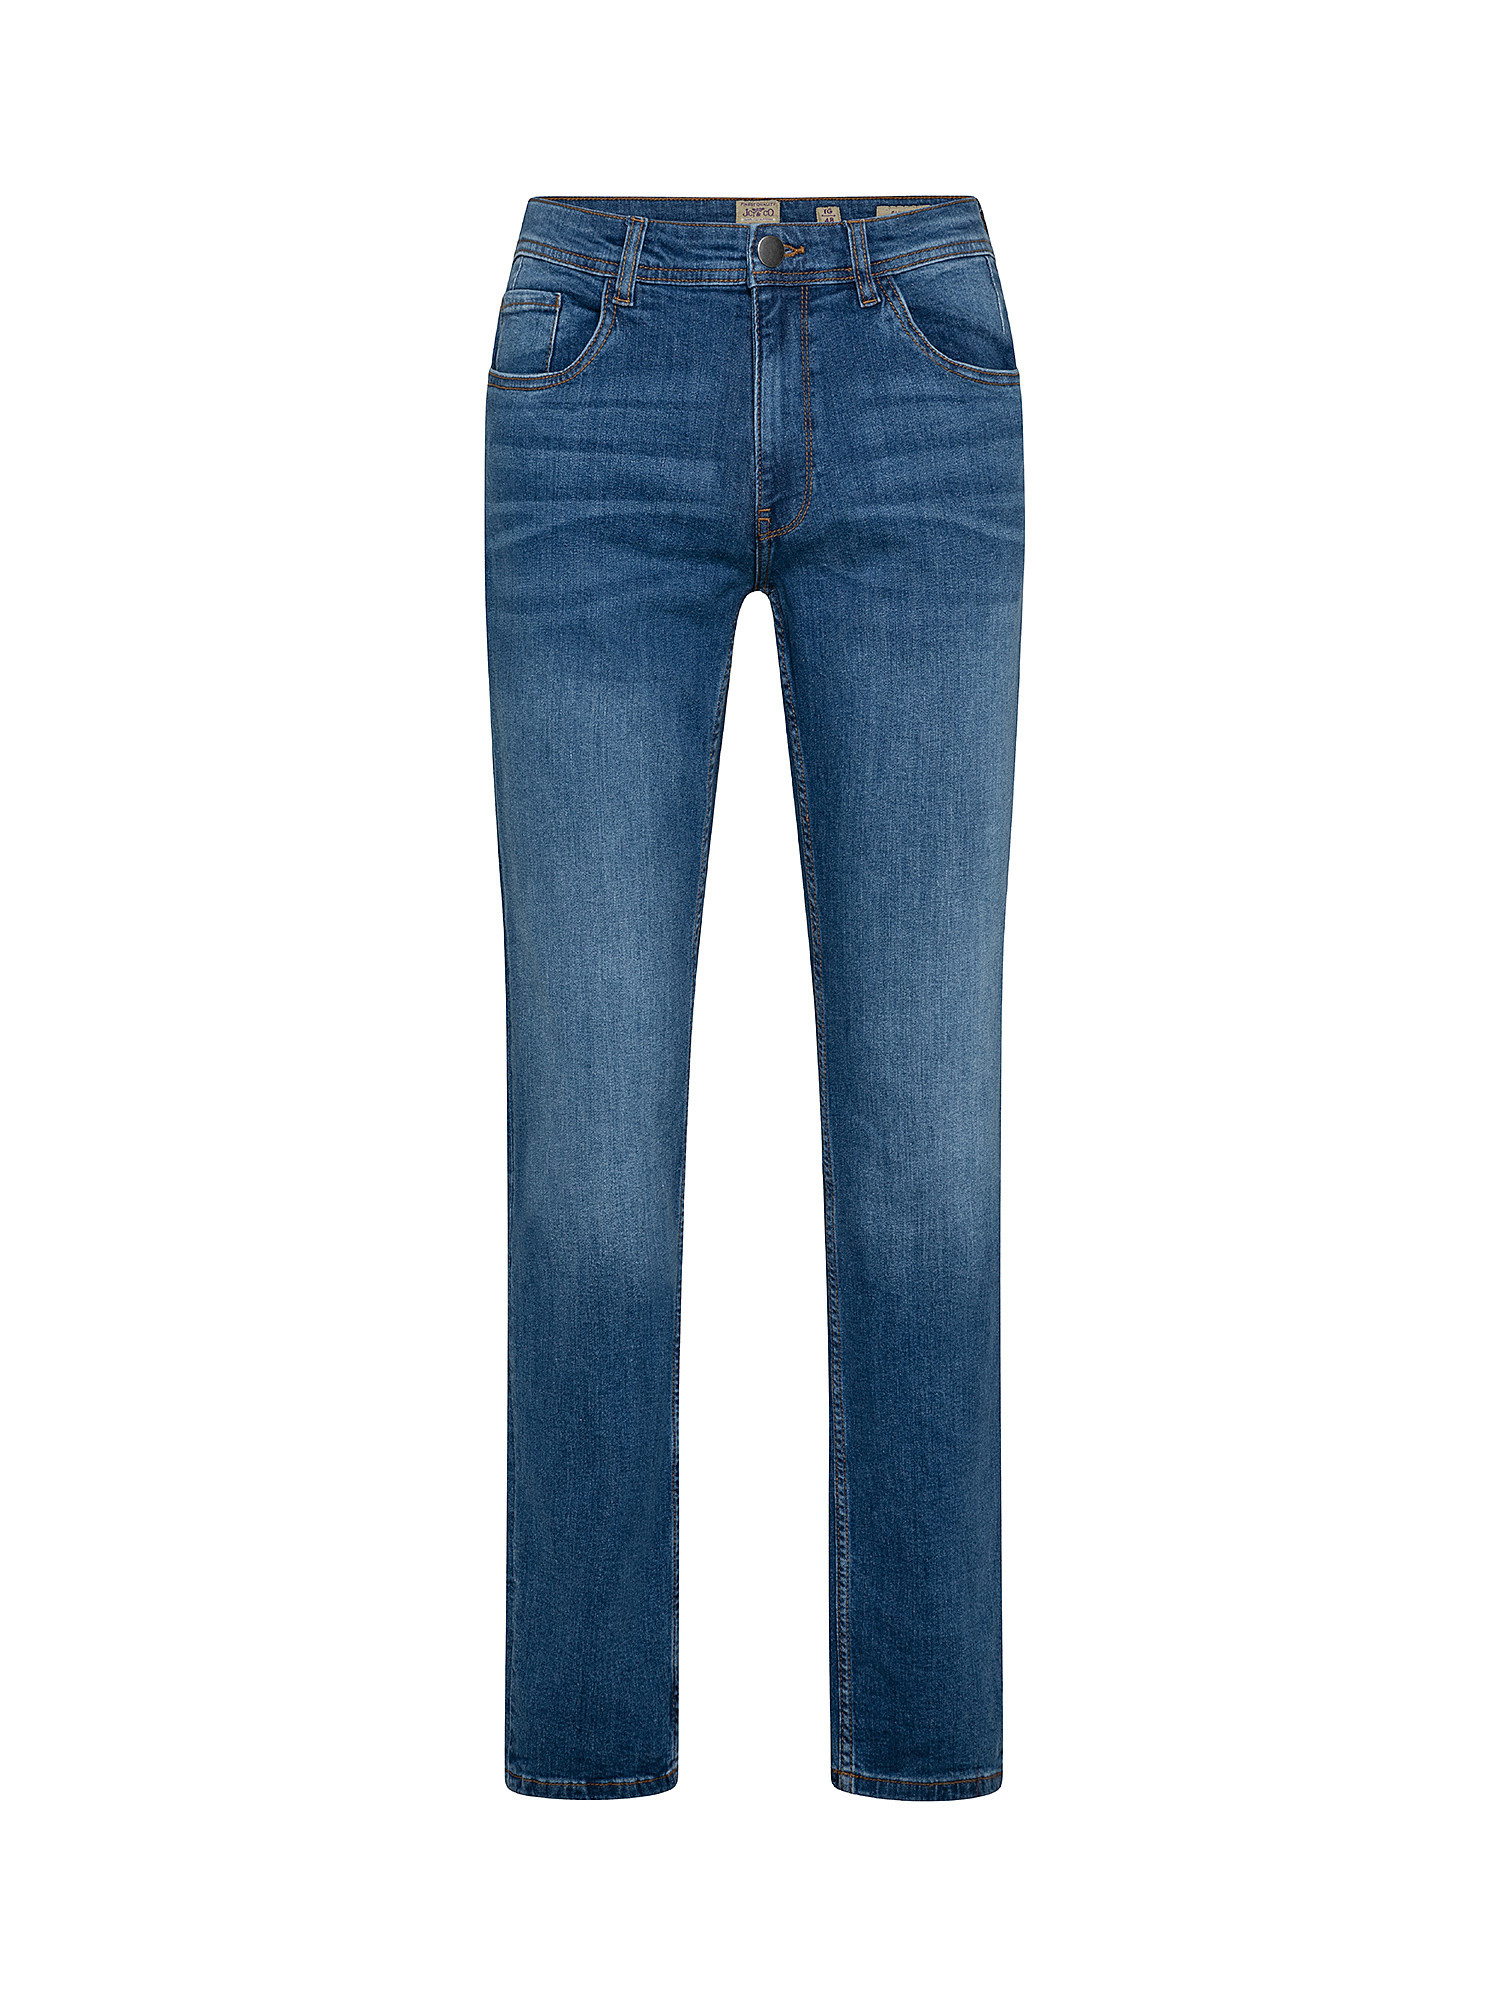 Jeans 5 tasche slim cotone stretch, Blu, large image number 0